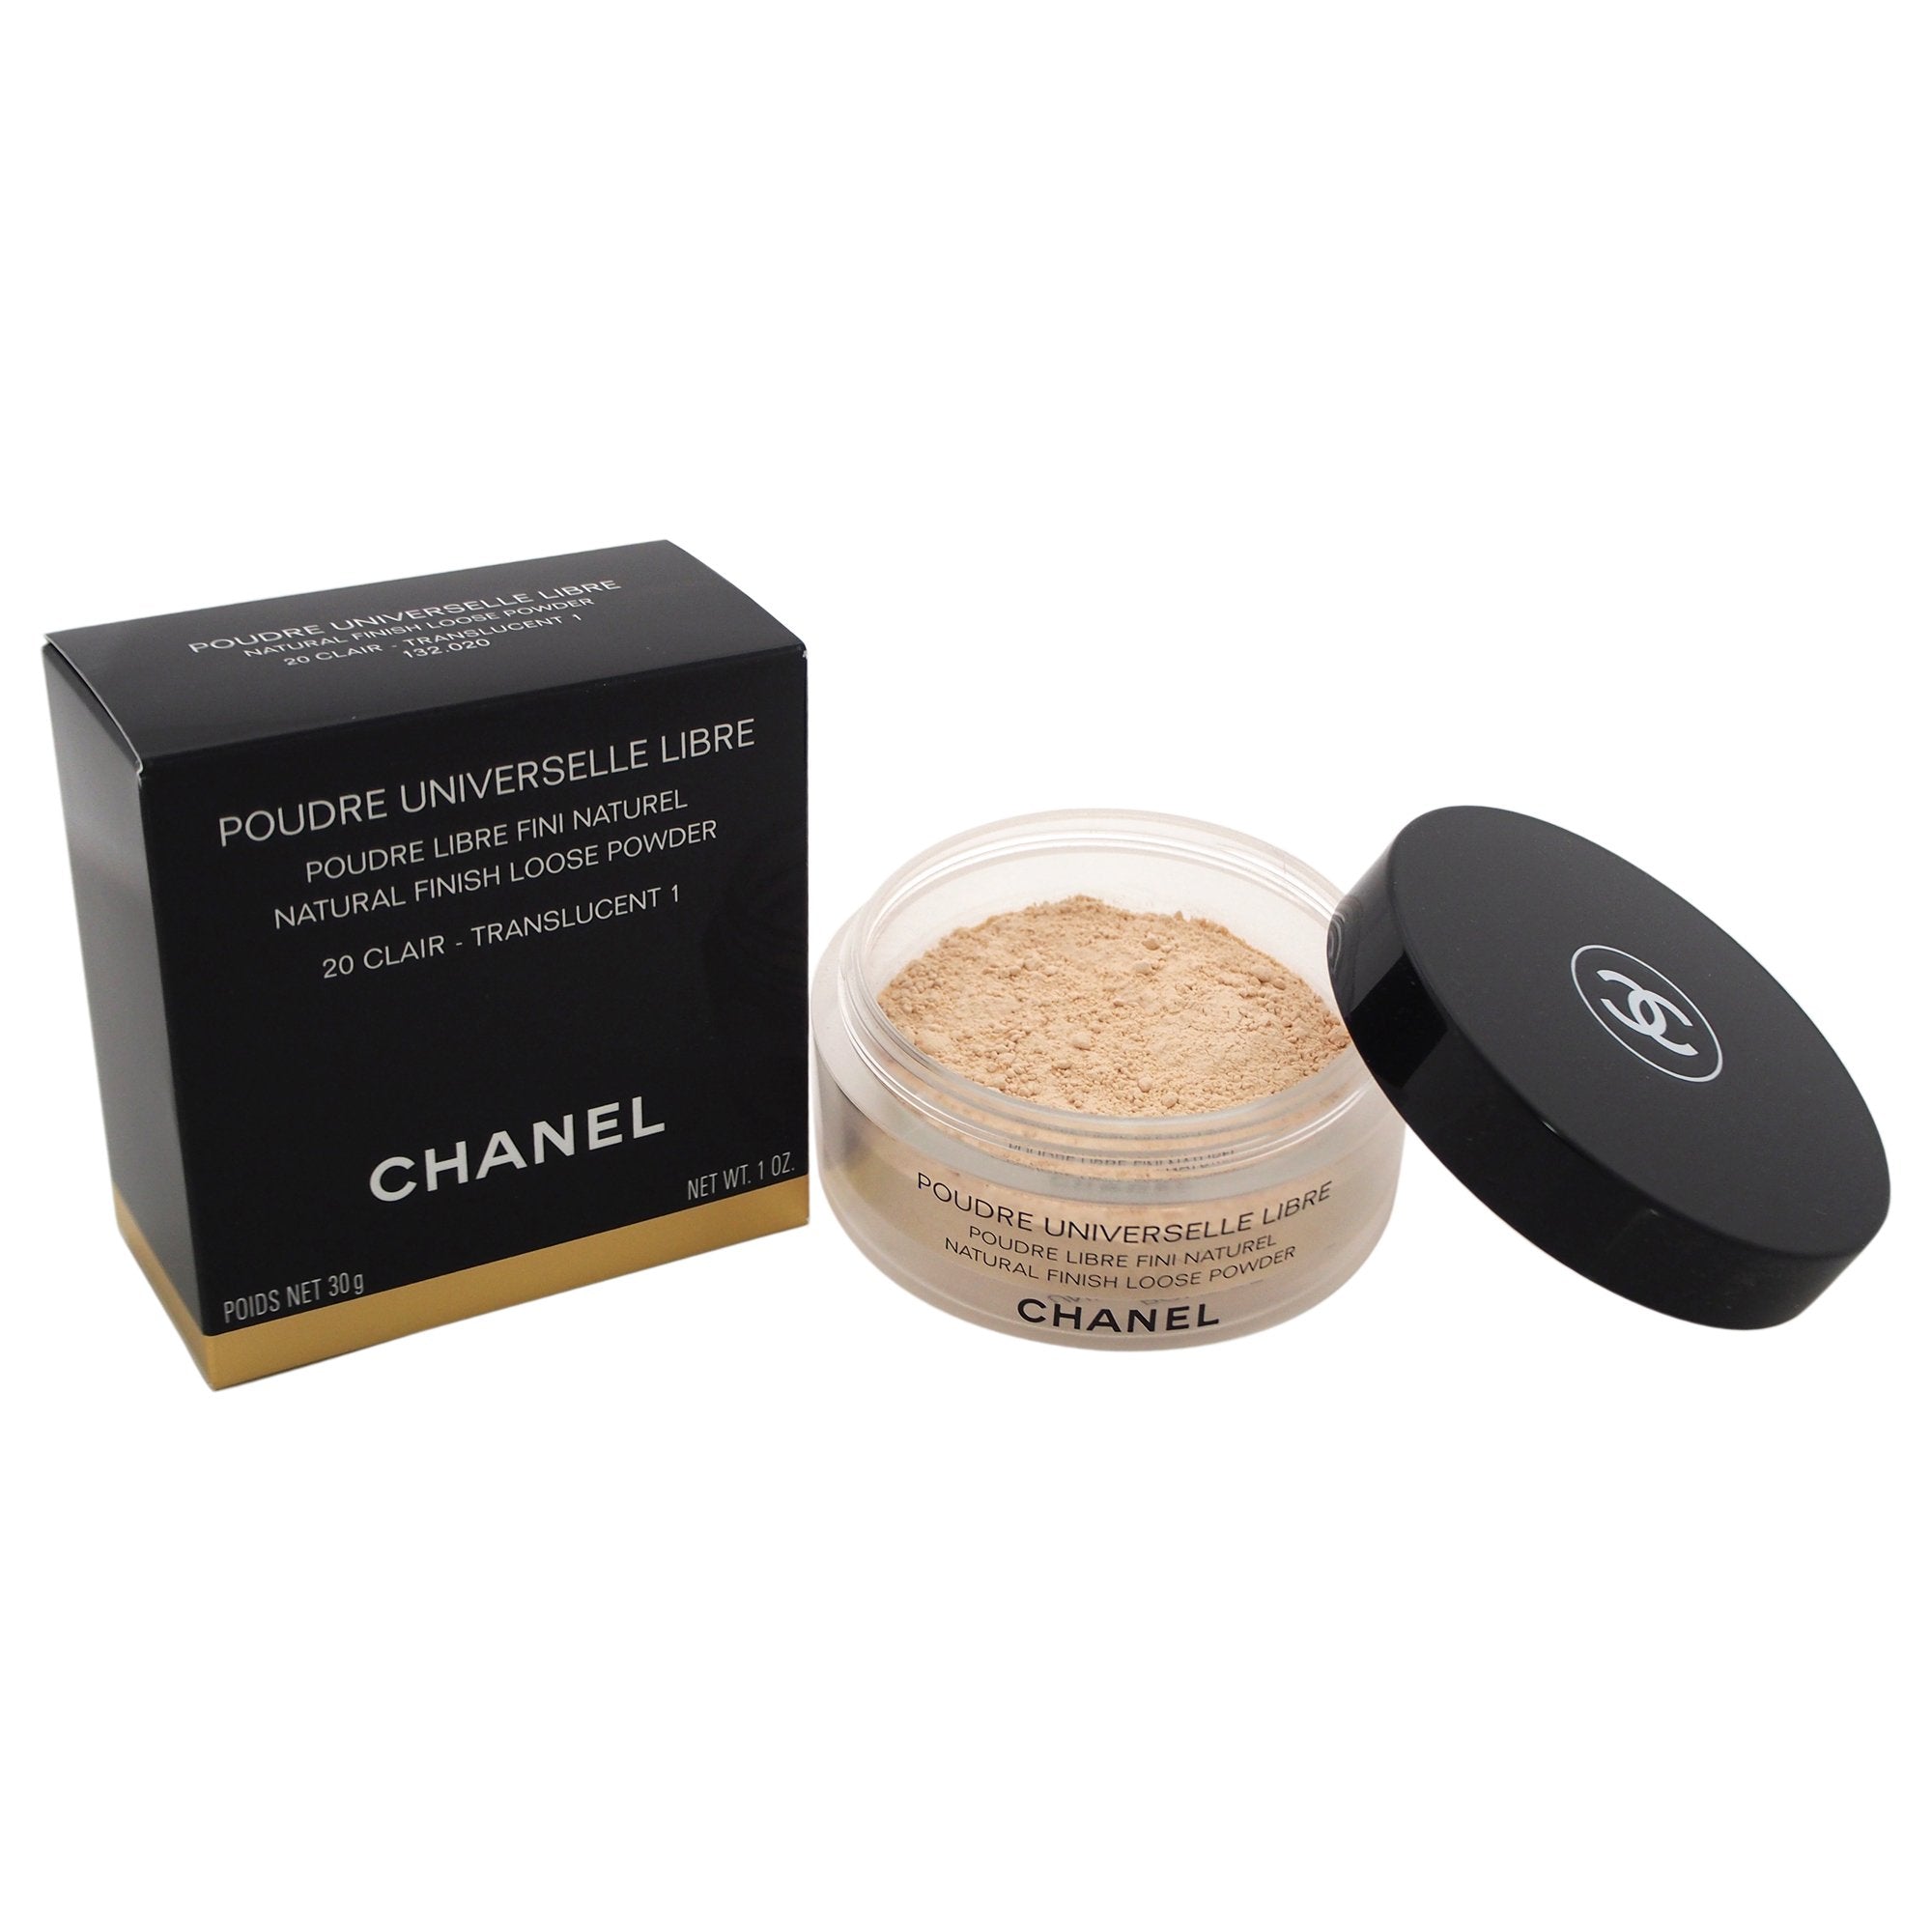 Chanel Poudre Universelle Libre Powder, 20 Clair, 1 Ounce